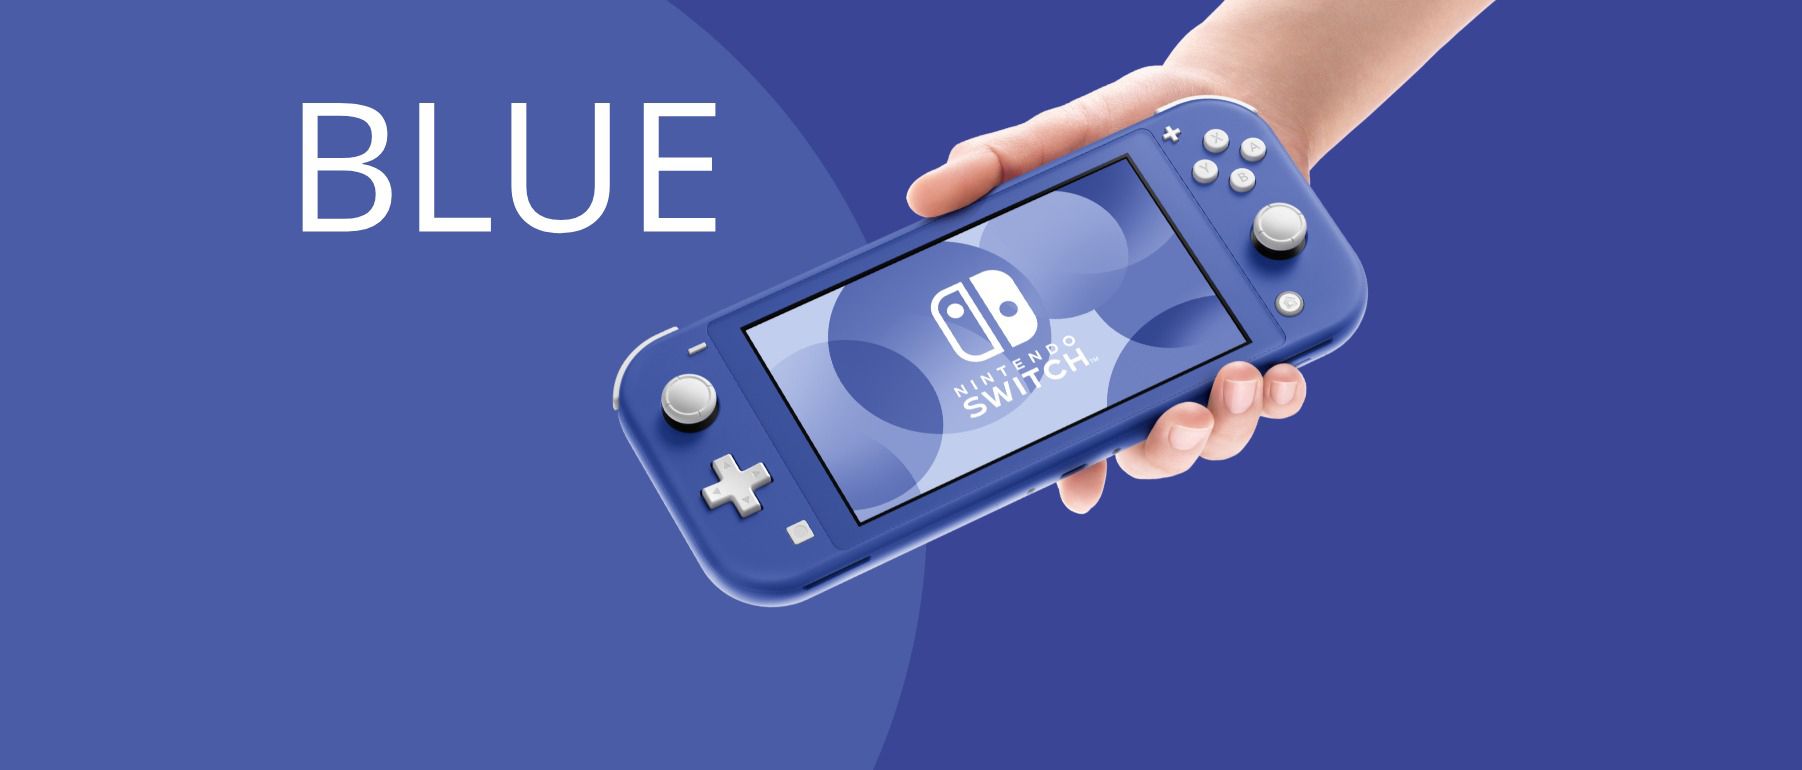 Blå Nintendo Switch Lite släpps i Europa den 7 maj i år!